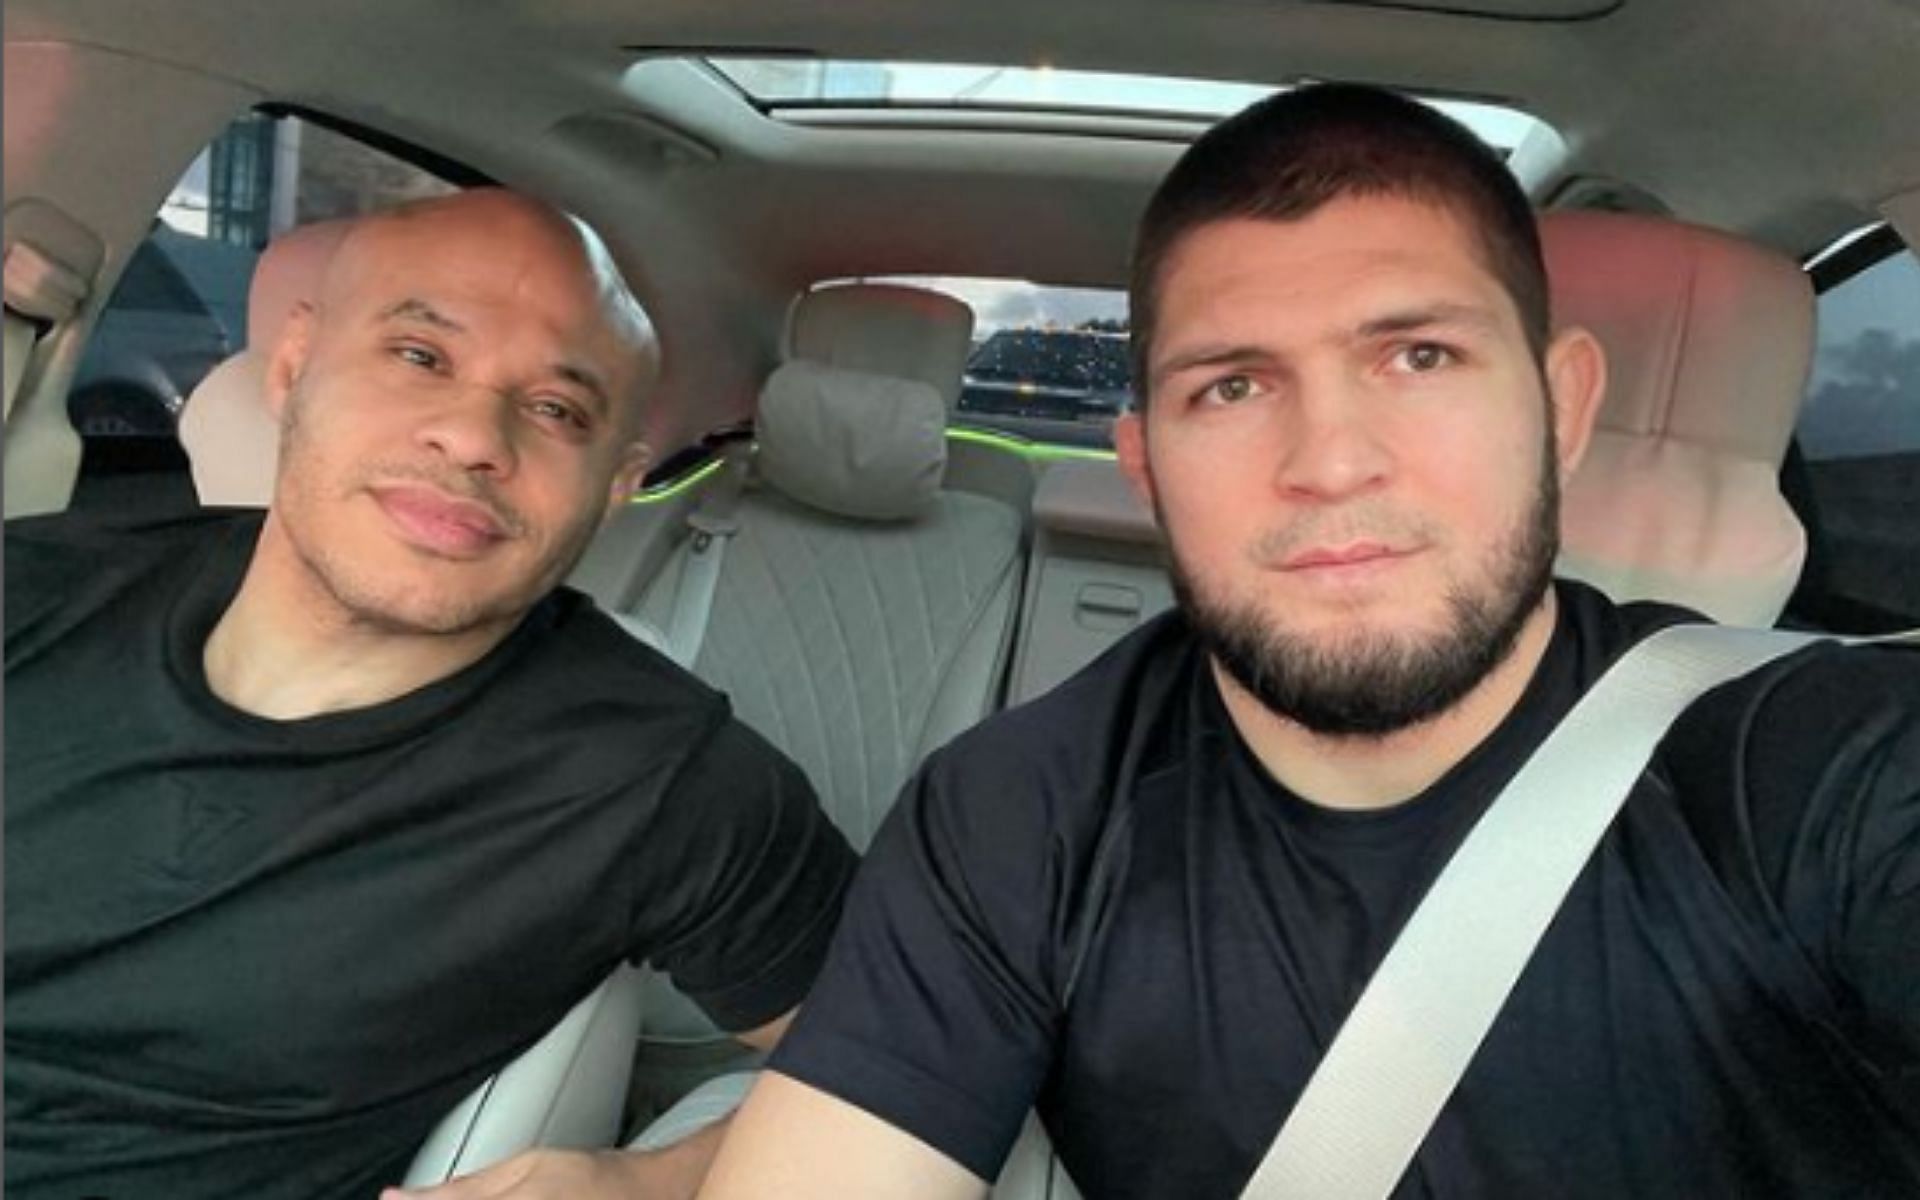 Khabib Nurmagomedov (right) with his friend and manager Ali Abdelaziz (left) [Image Credit: via @khabib_nurmagomedov on Instagram]